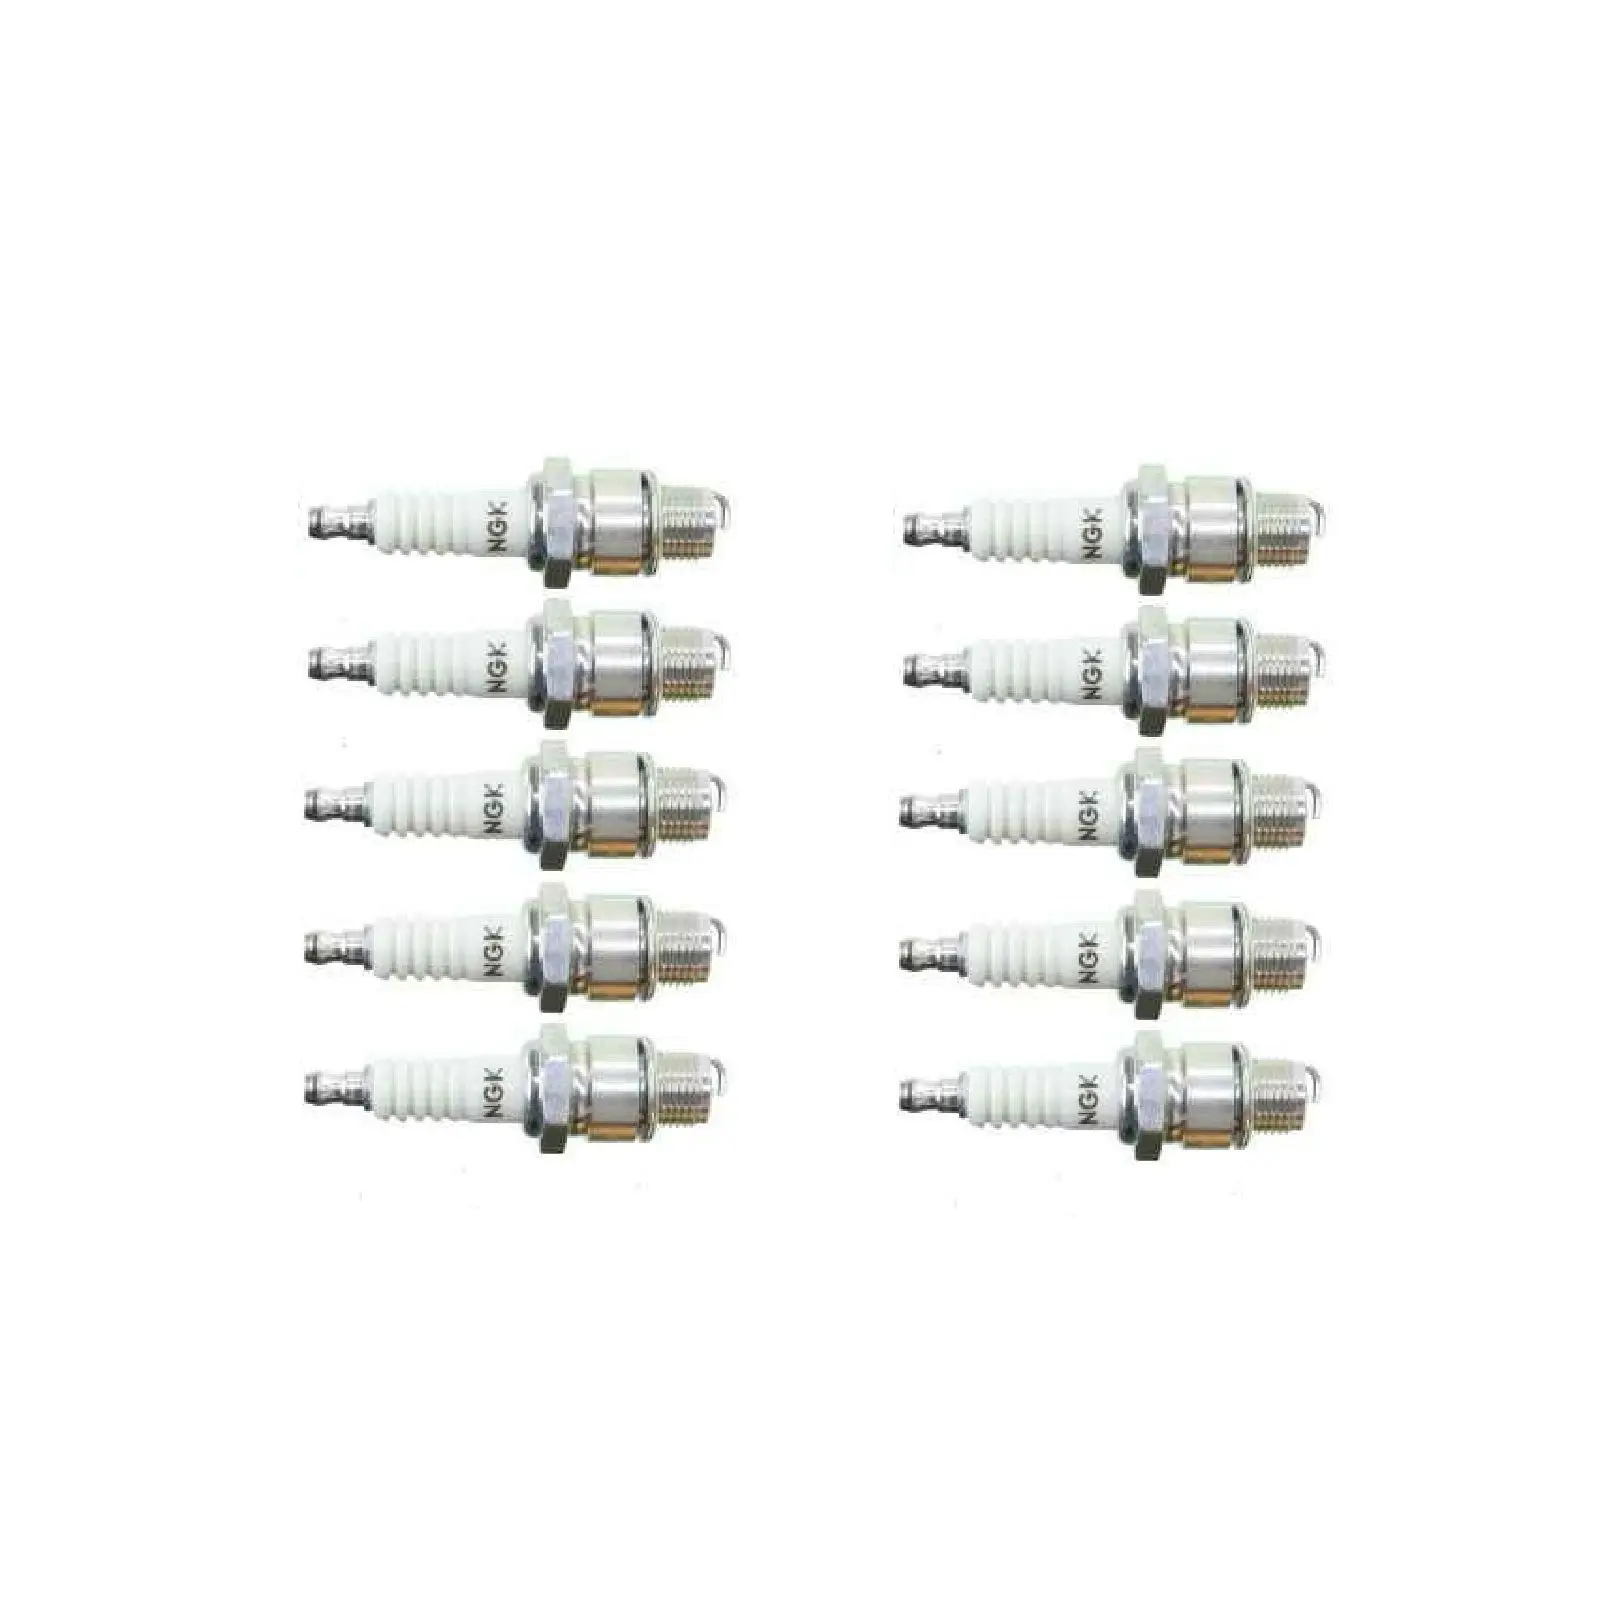 10PCS NGK Spark Plug for MARINER 6.0 hp 6C 6H8 6D 6H6 8.0 hp 8C 6G1 9.9 hp 9.9C 682 15hp 15C 684 K15 6K4 K15 6M7 Marathon 684